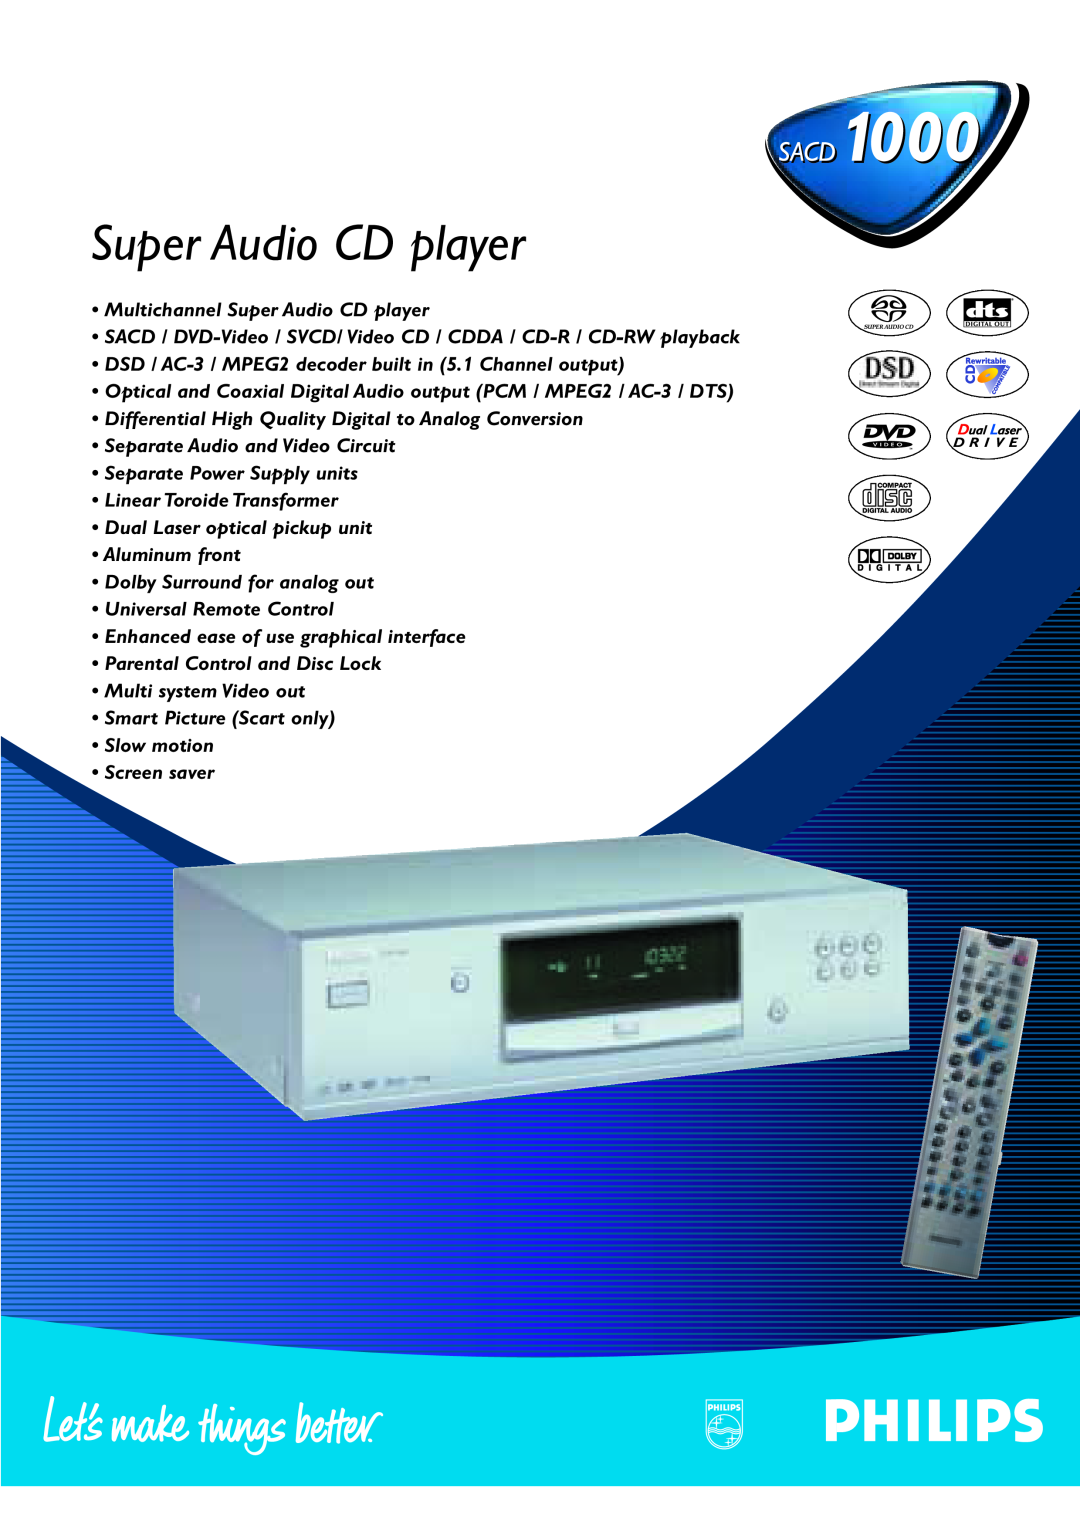 Philips 9000 manual SACD1000, Super Audio CD player 